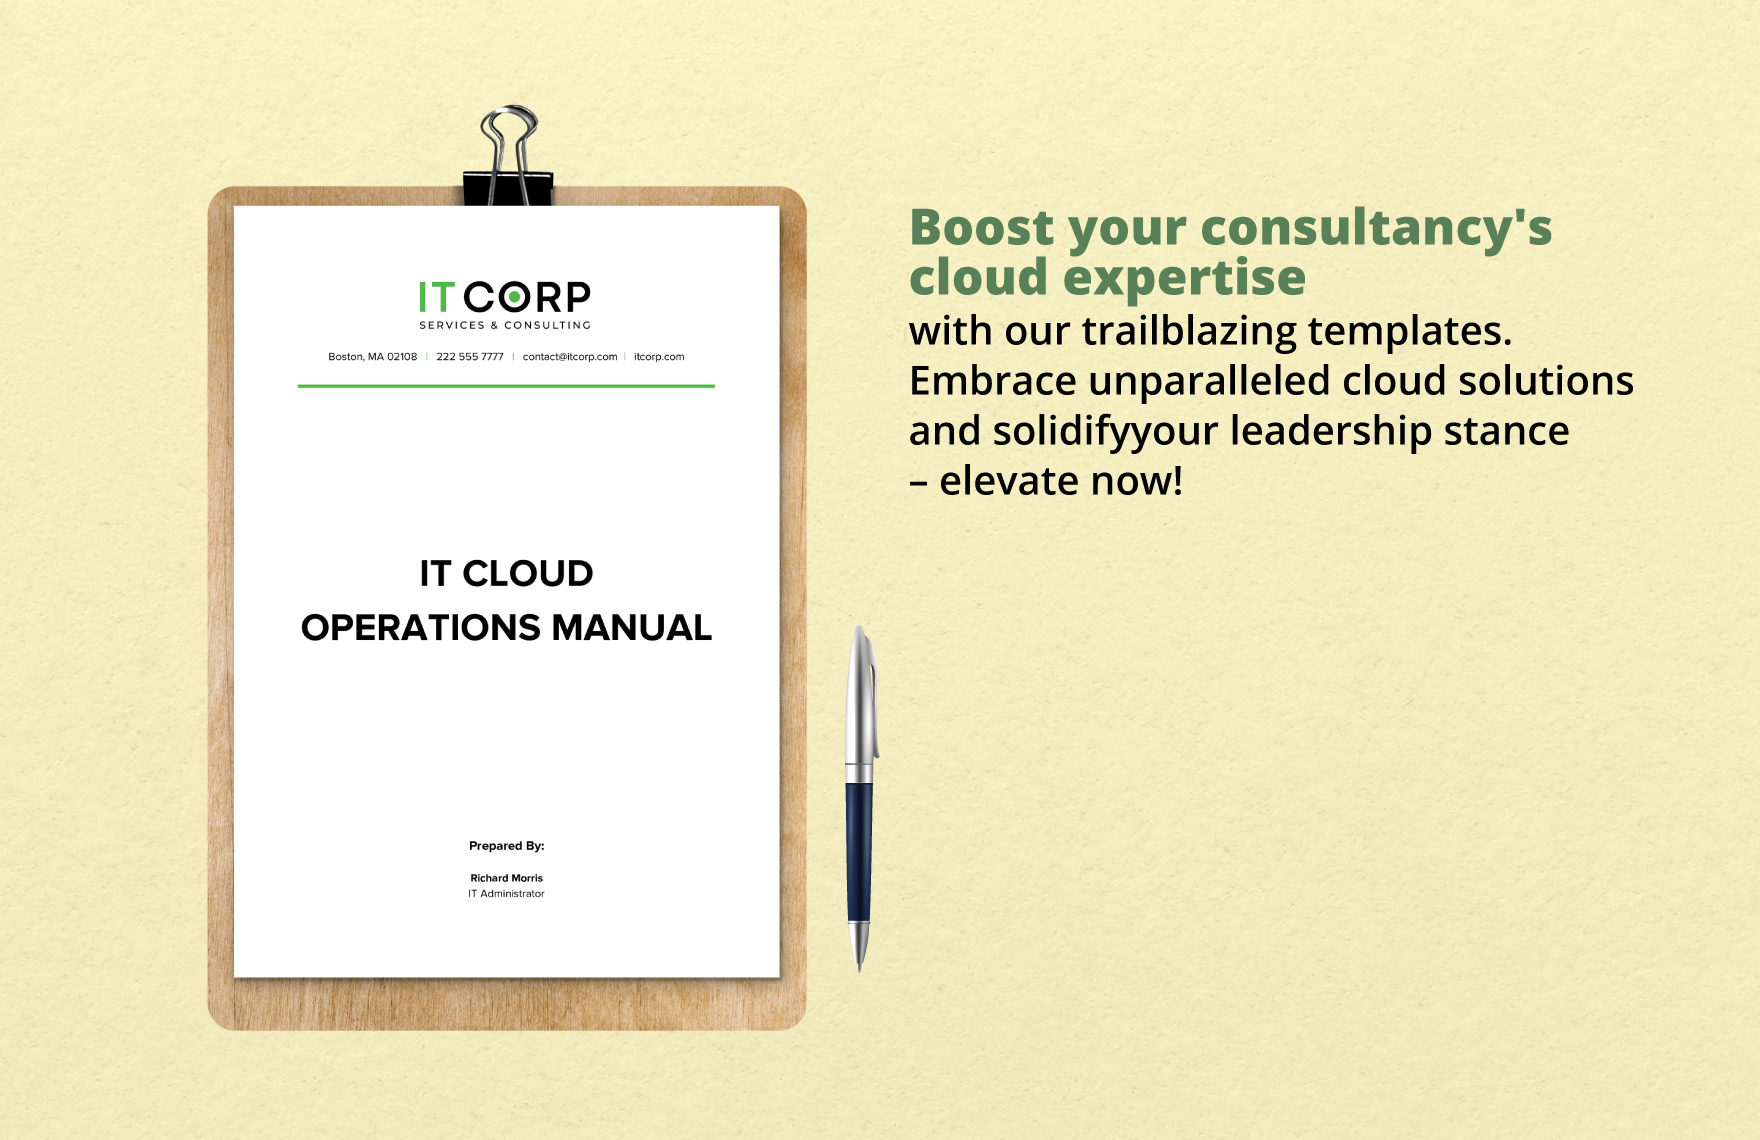 IT Cloud Operations Manual Template